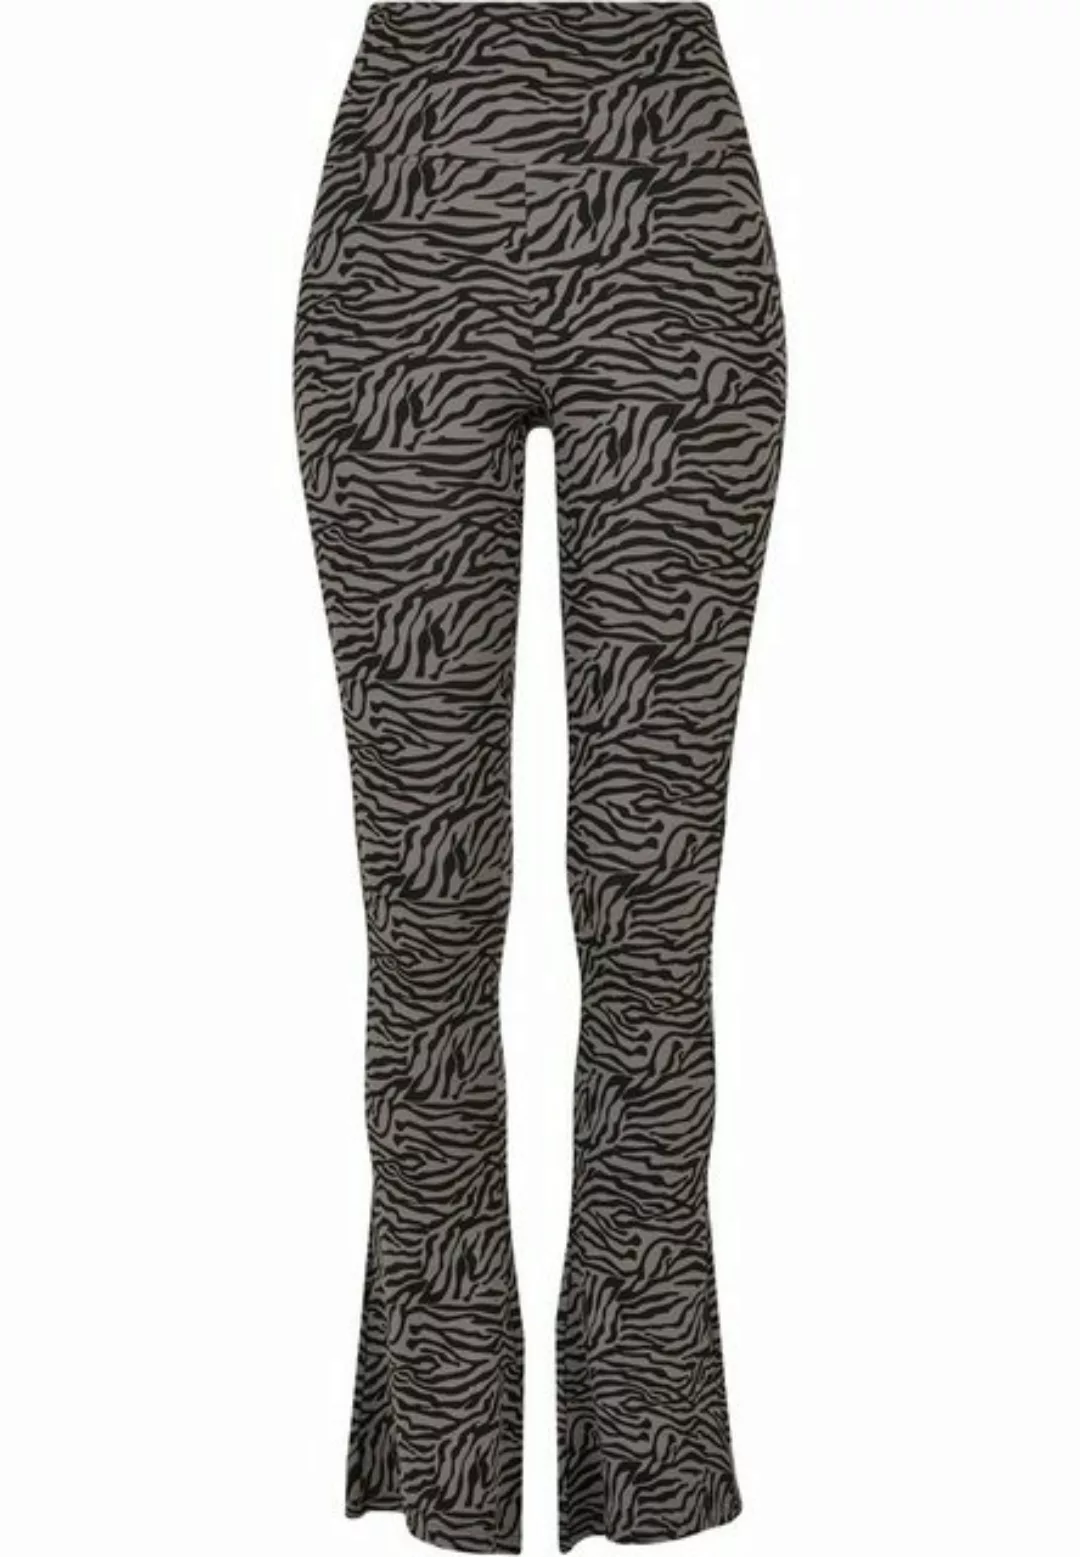 URBAN CLASSICS Leggings Damen Ladies High Waist Zebra Boot Cut Leggings (1- günstig online kaufen